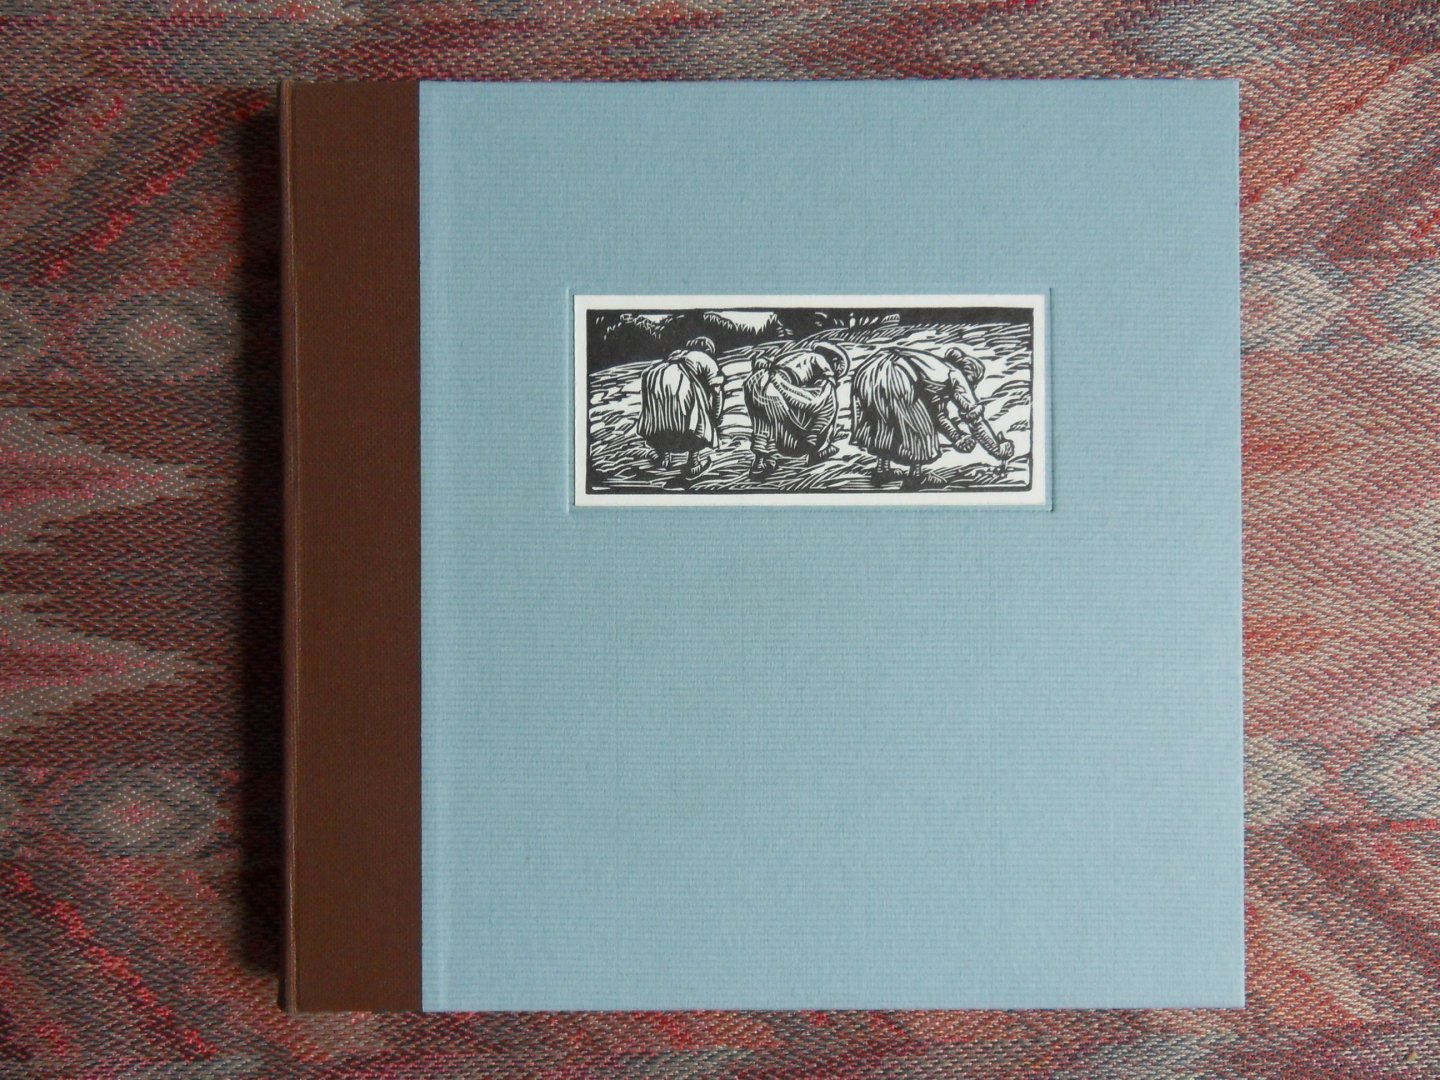 Blamires, David [A bibliographical essay]; Jaffé, Patricia [MP as a wood engraver]; Hyde, Sarah [Catalogue of engraved work]. - Margaret Pilkington. 1891 - 1974. [Genummerd ex. 41 / 175 ].